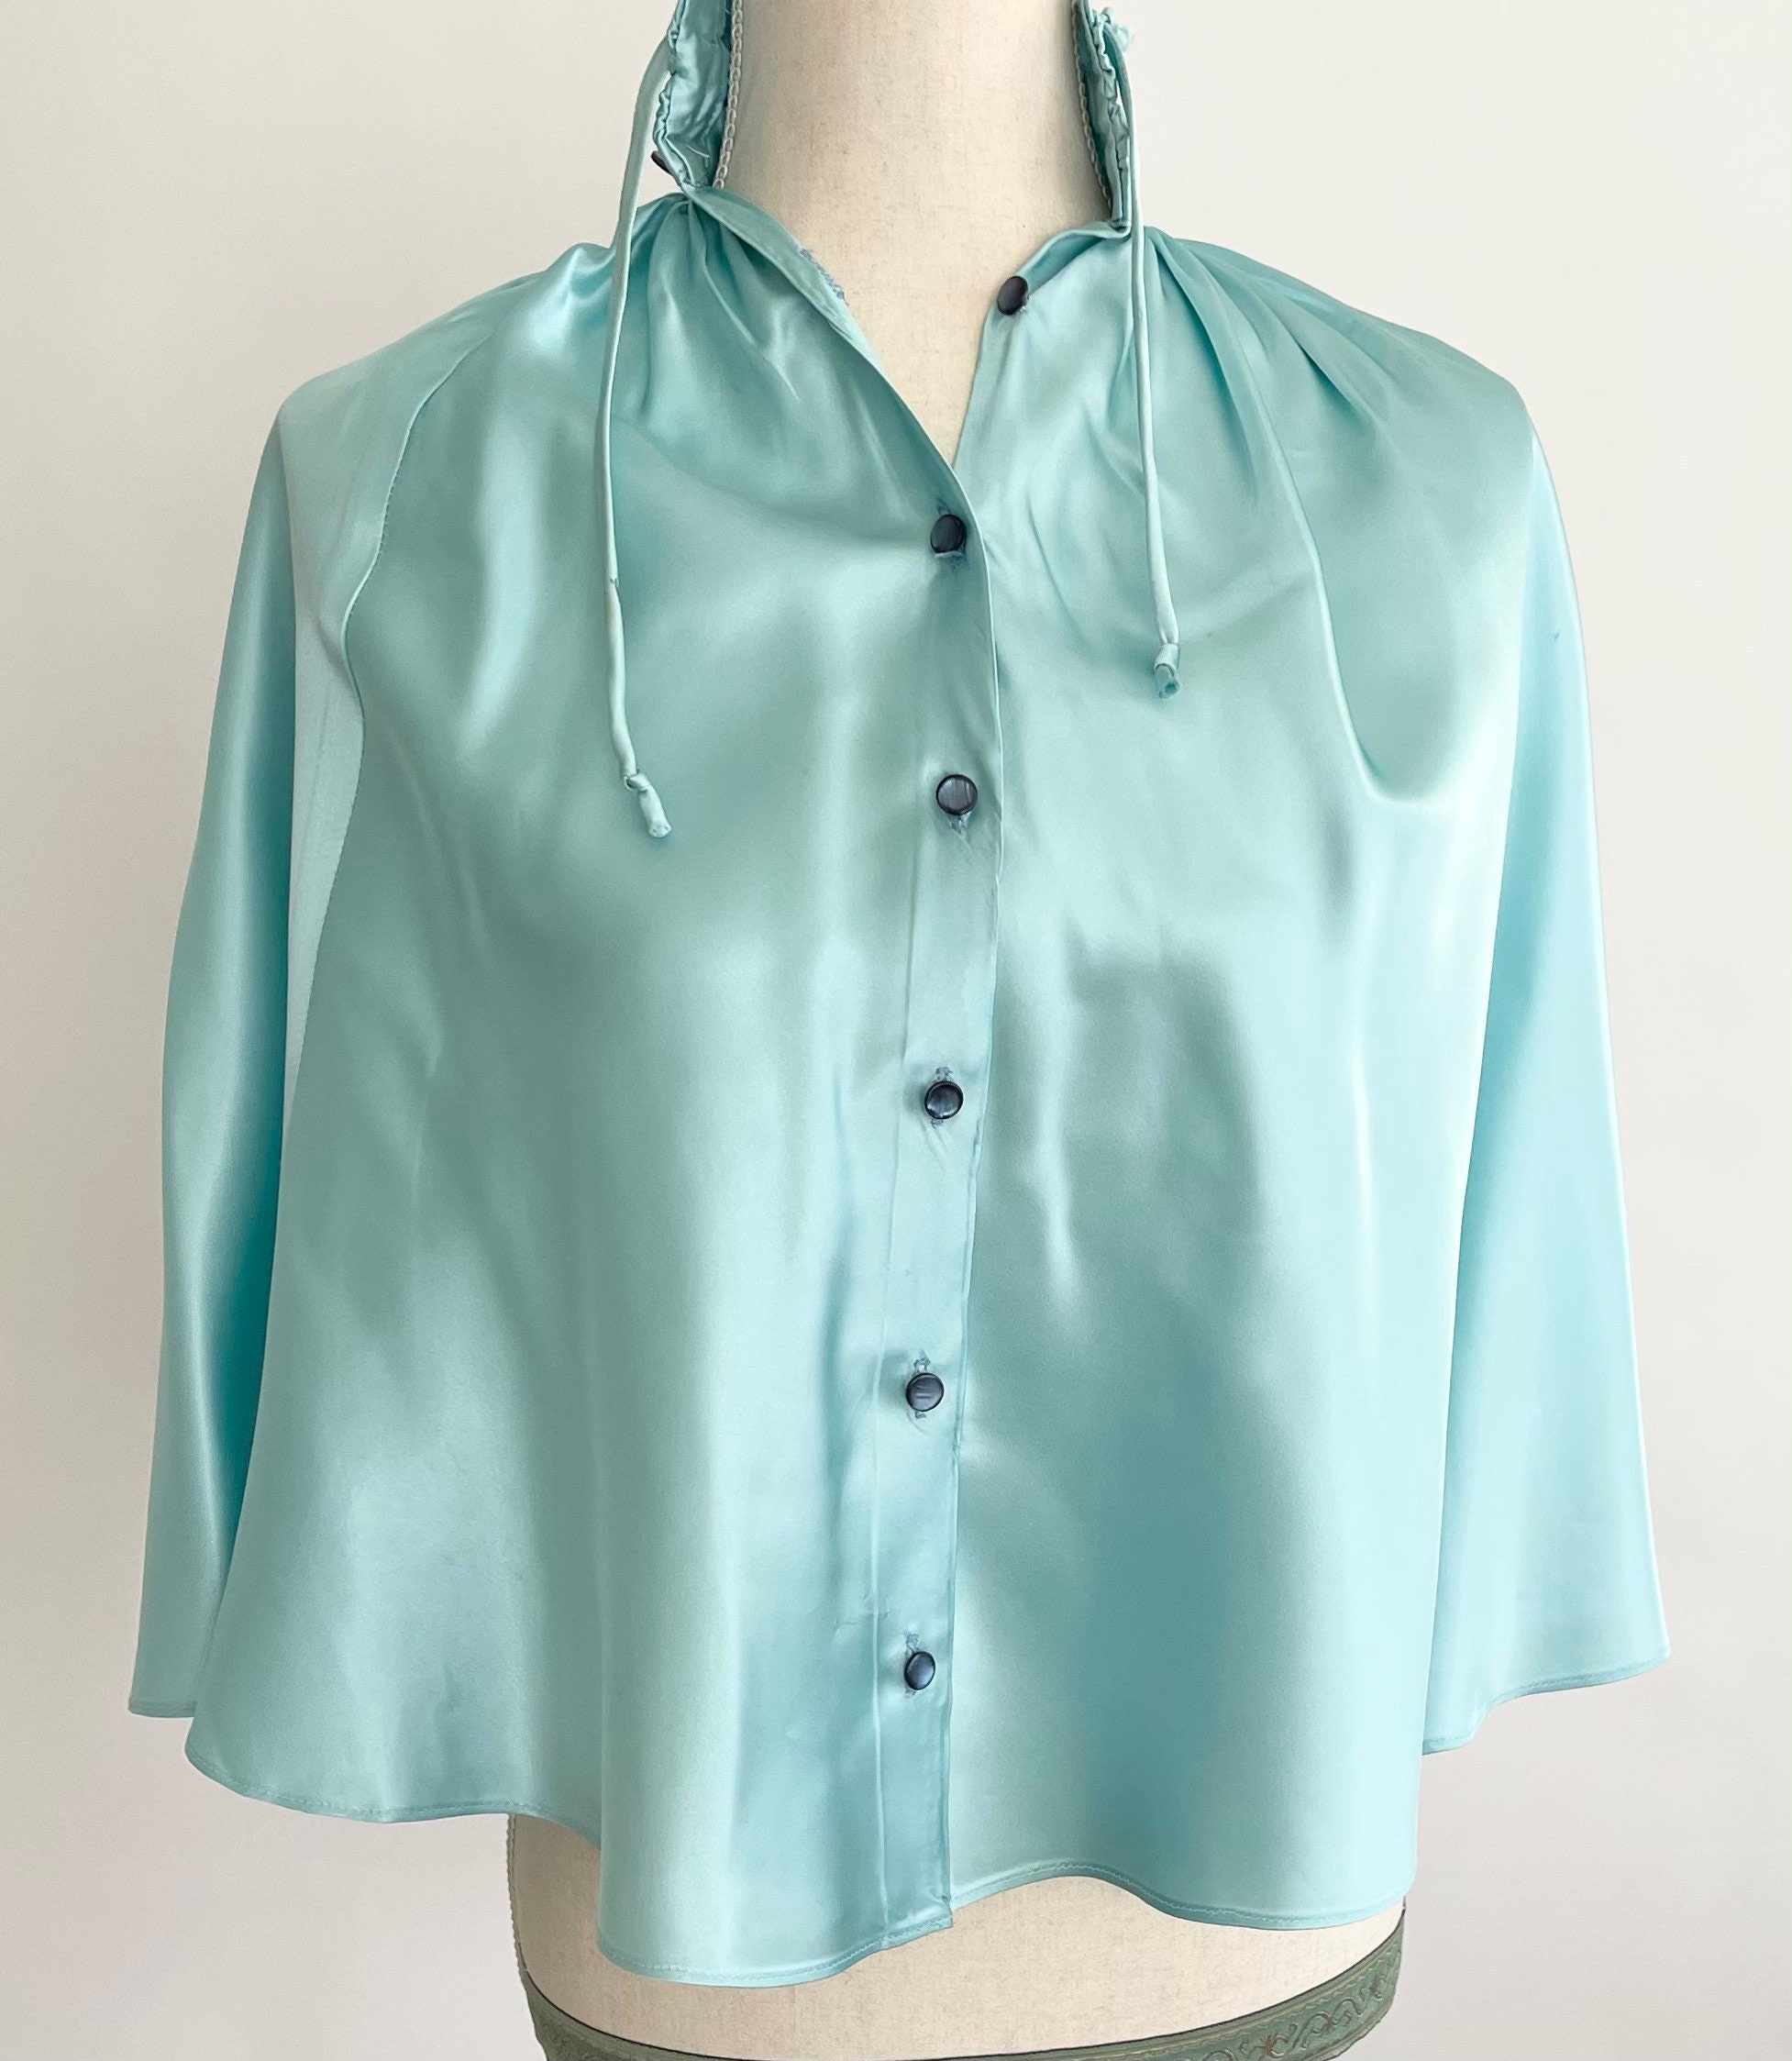 Aqua Satin Bed Jacket Vintage 30s 40s Lingerie Sleepwear High Tie Neck ...